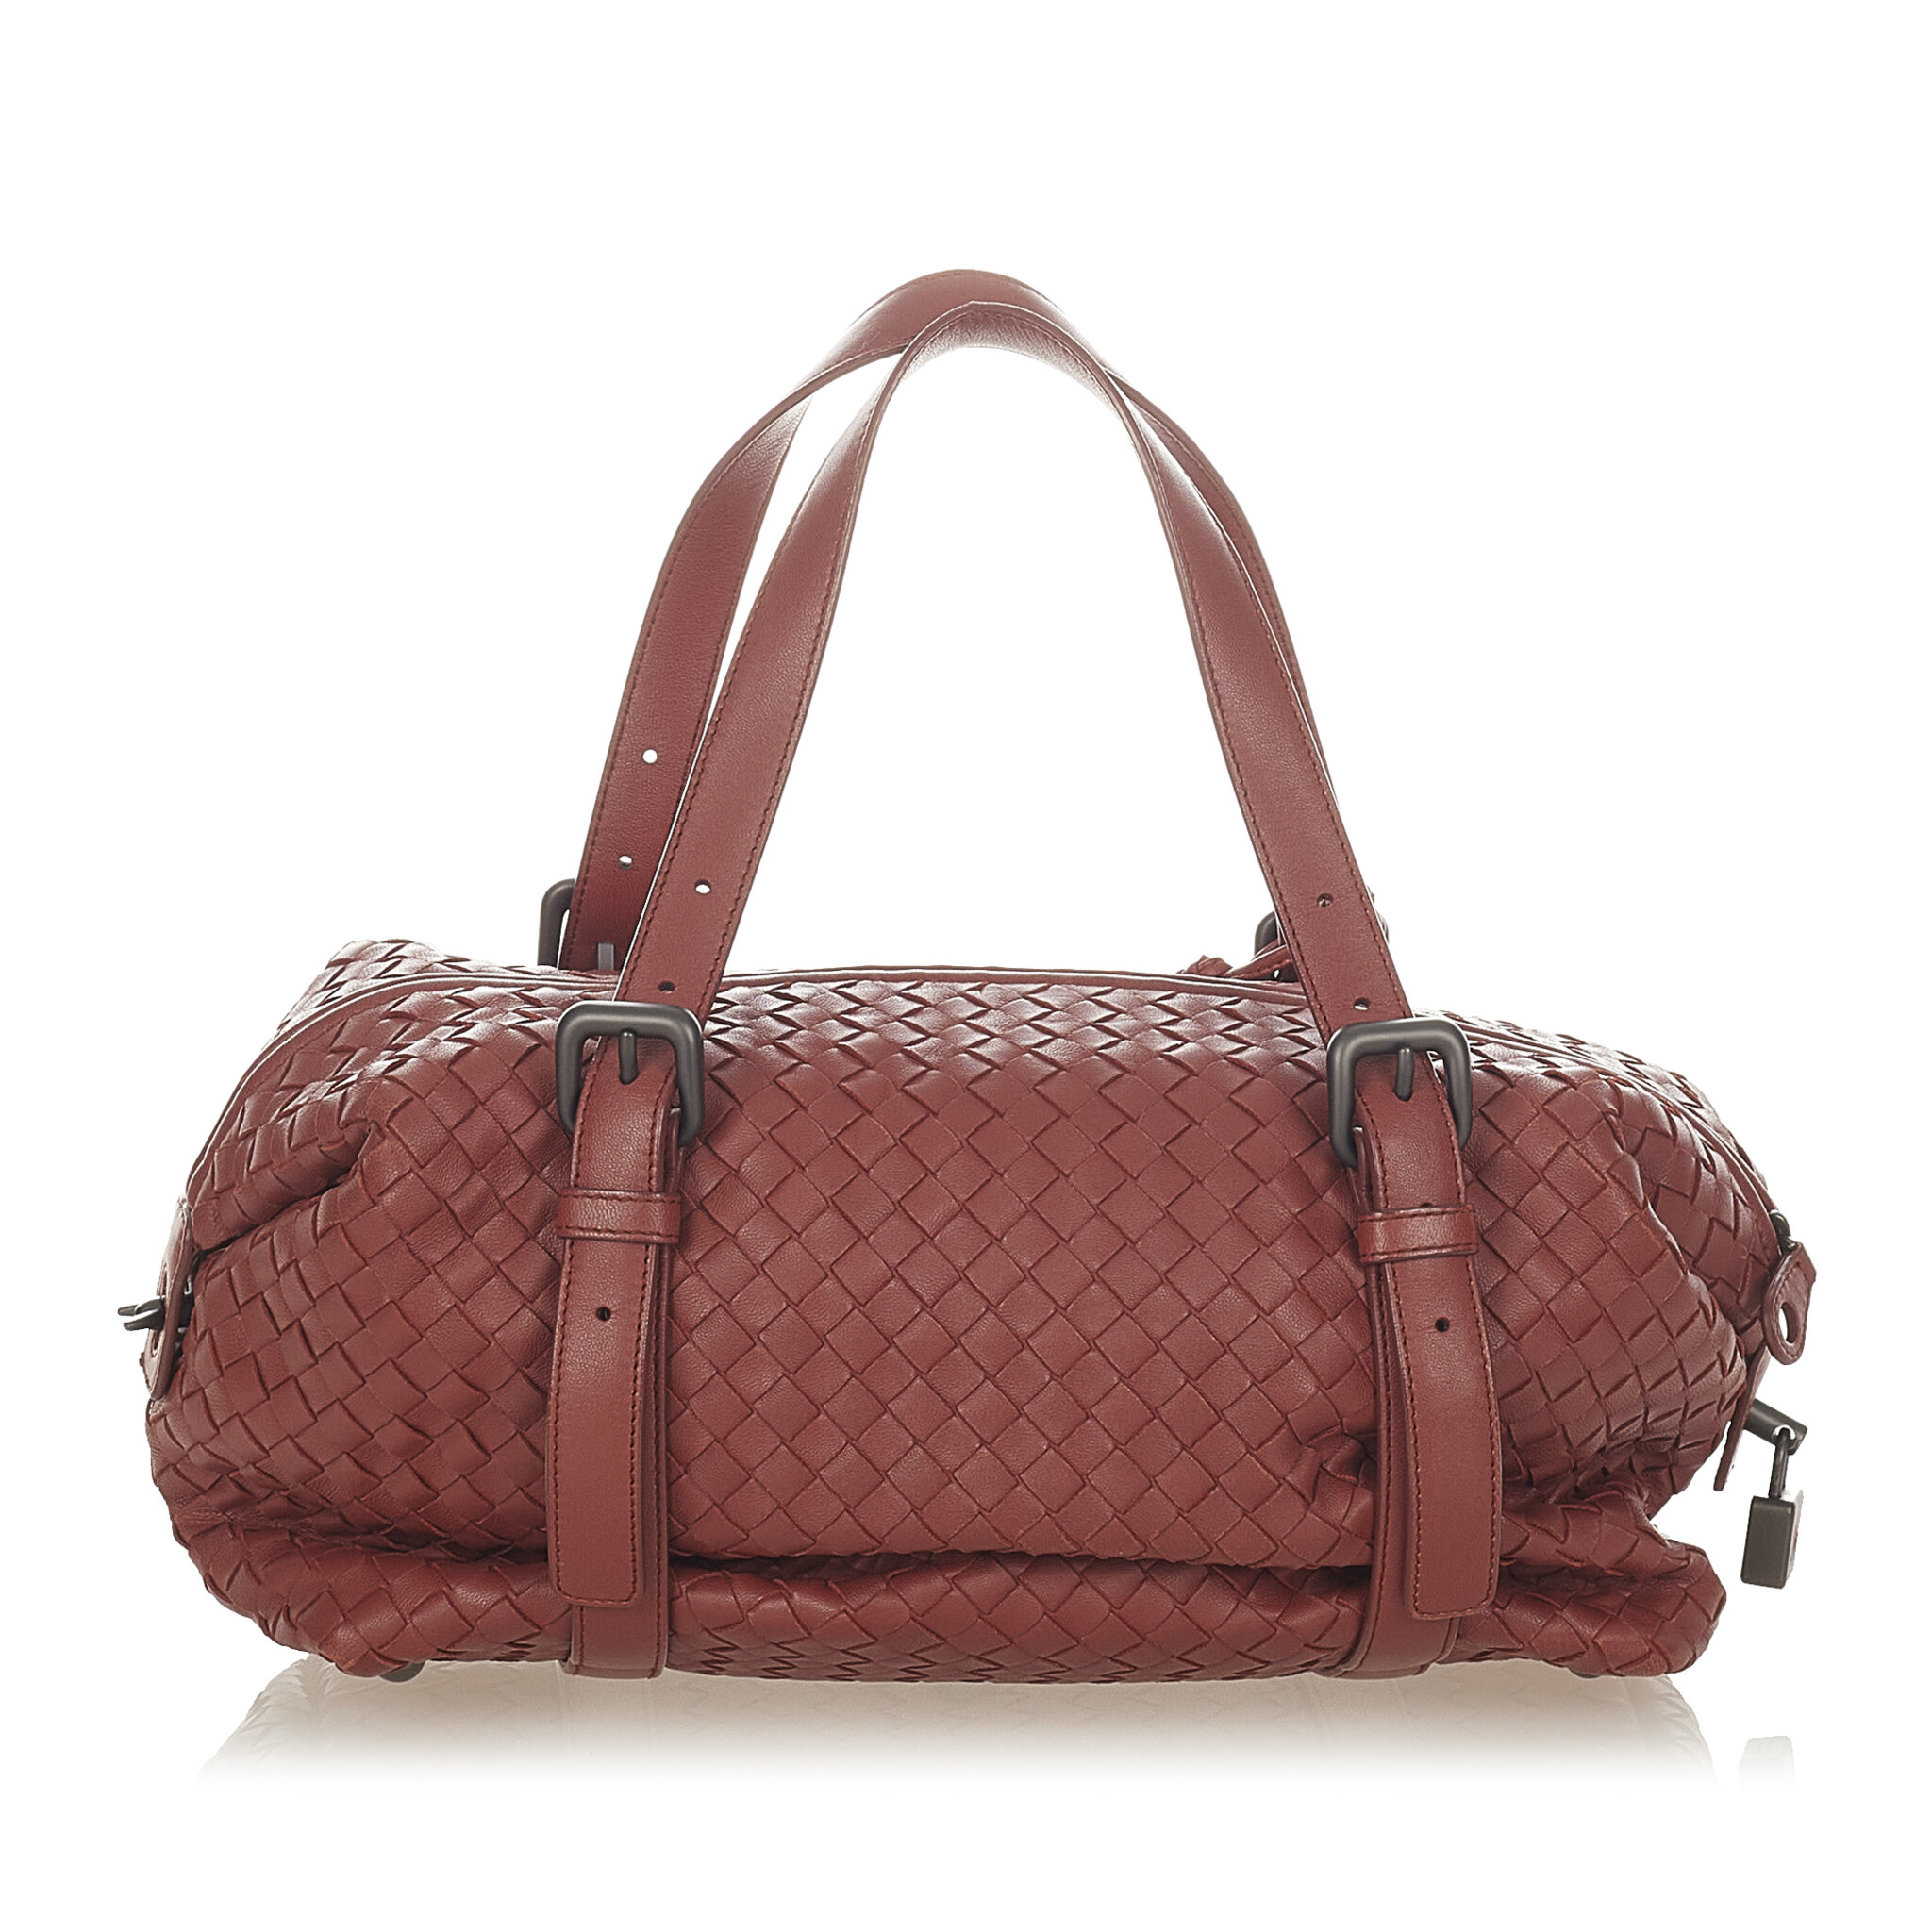 Bottega Veneta Intrecciato Leather Handbag, ONESIZE, red